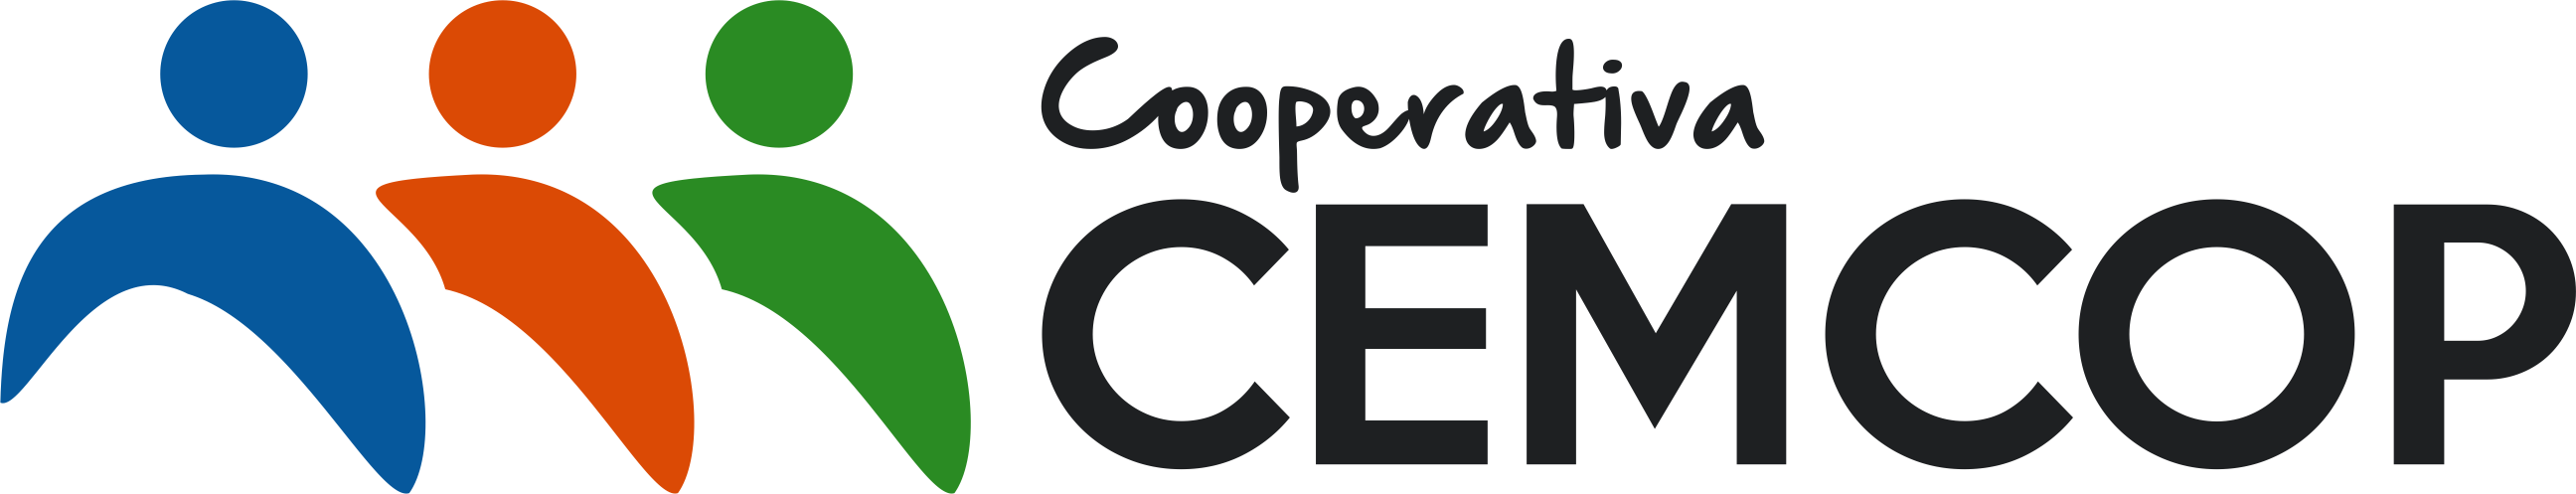 logo-editable-vector-CEMCOP-horizontal.png